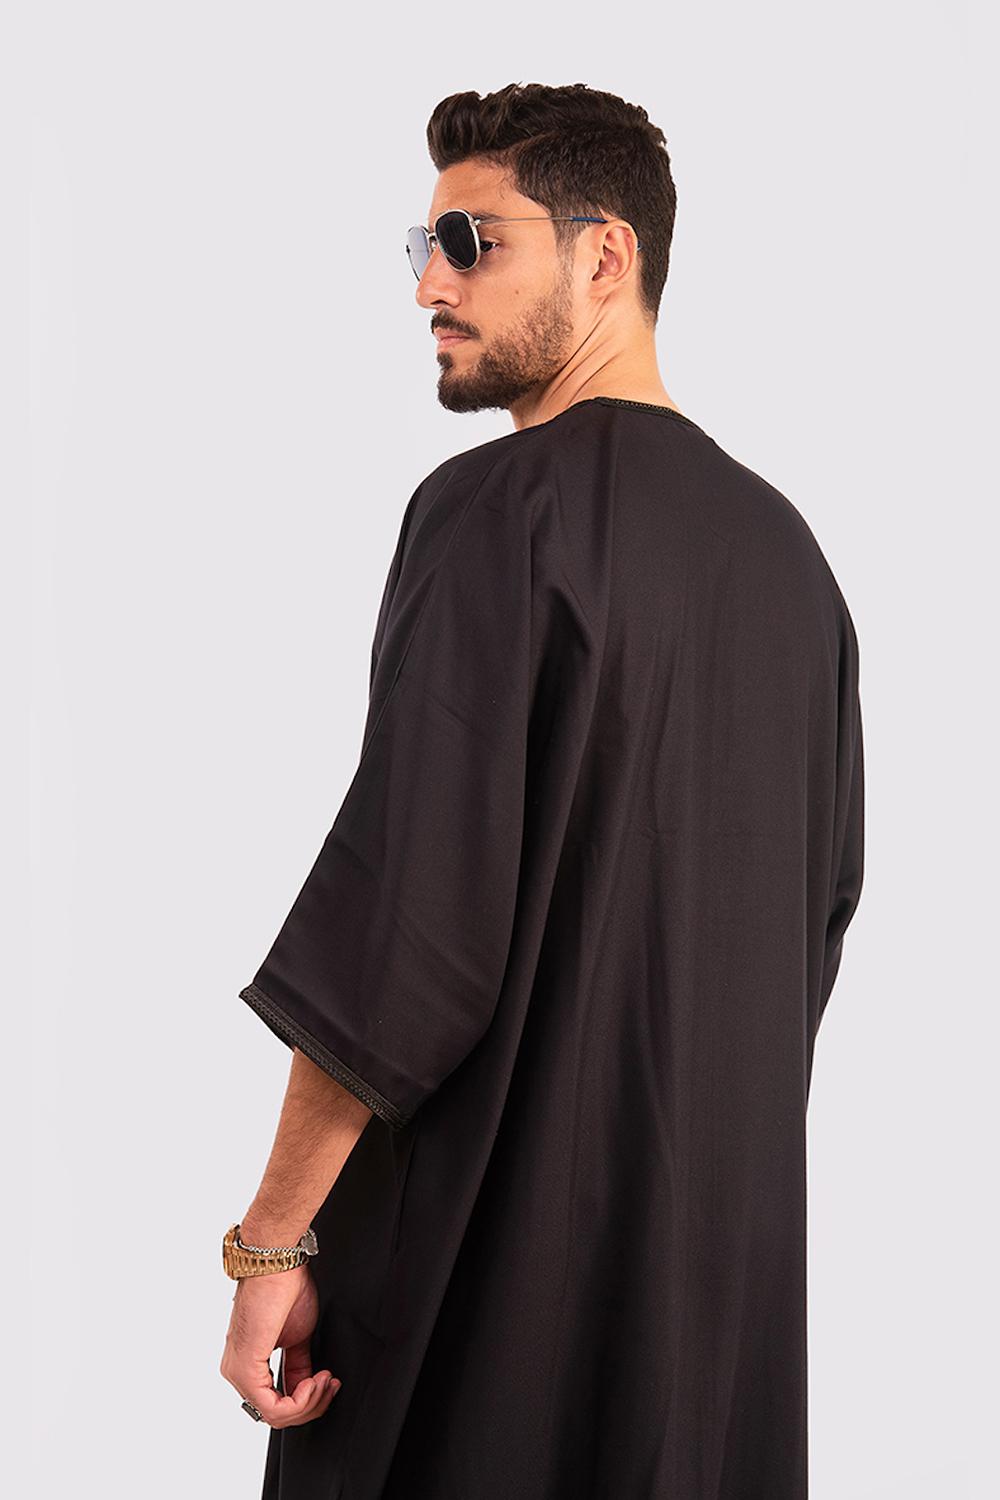 Gandoura Rais Men's Long Gandoura Robe Long Sleeve Thobe in Black